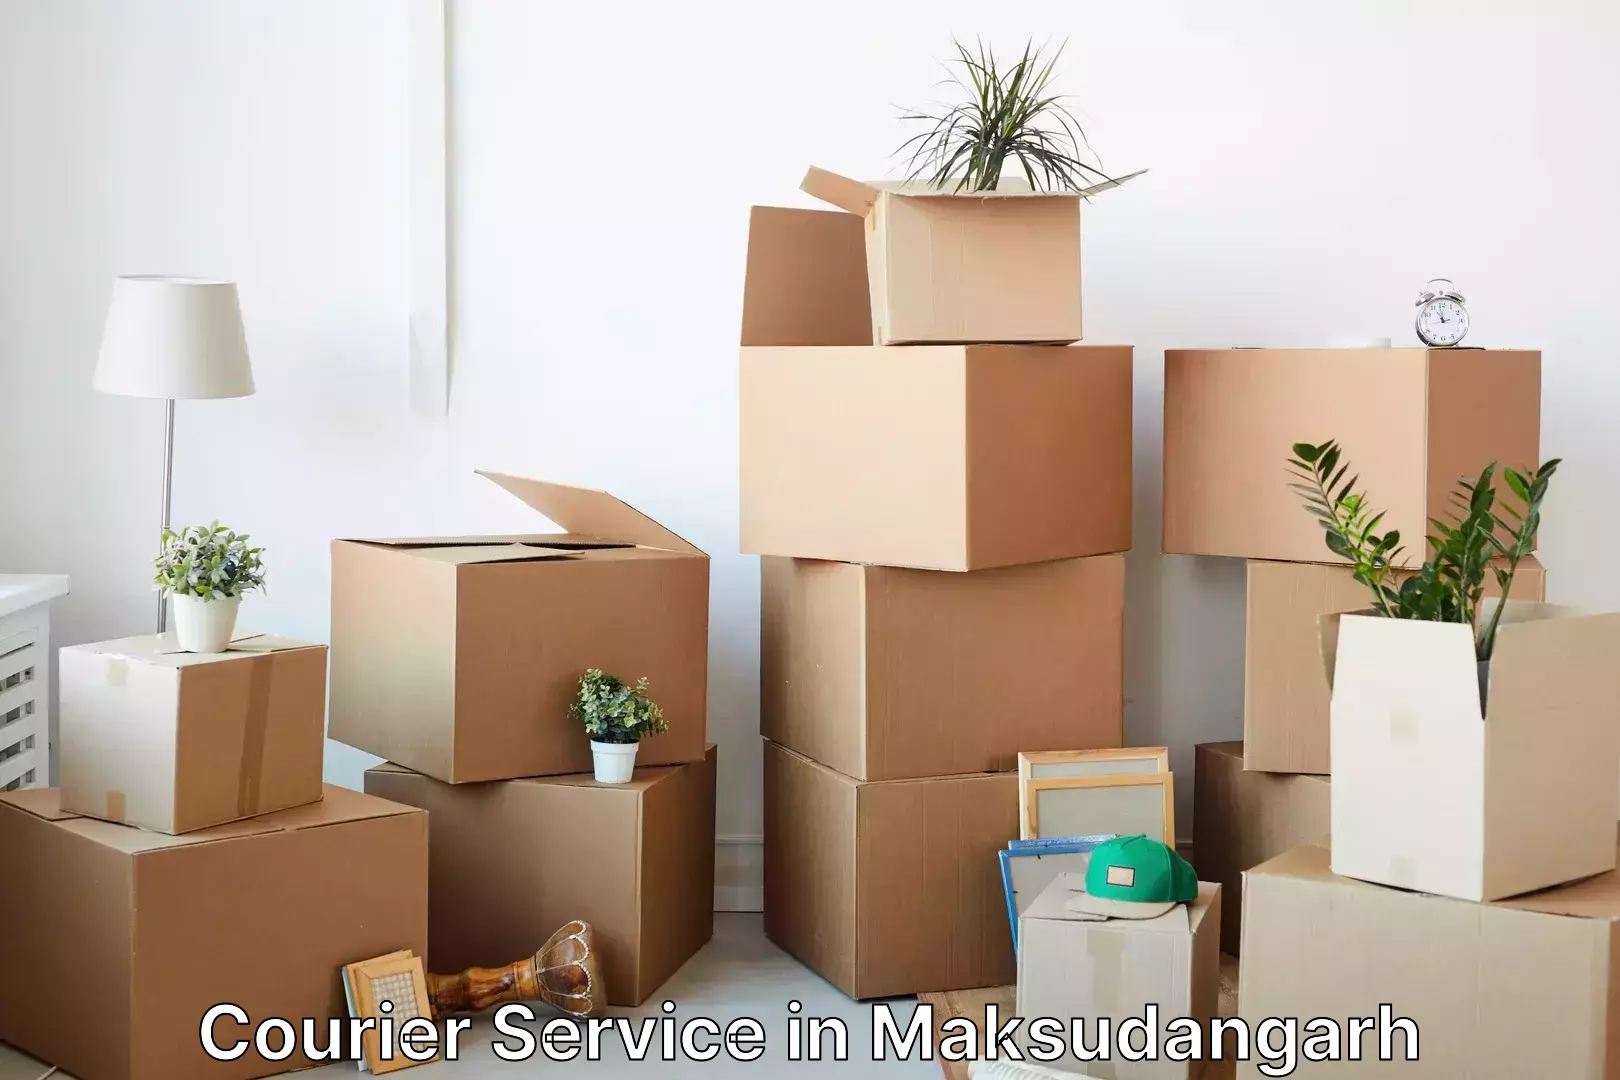 Courier service efficiency in Maksudangarh